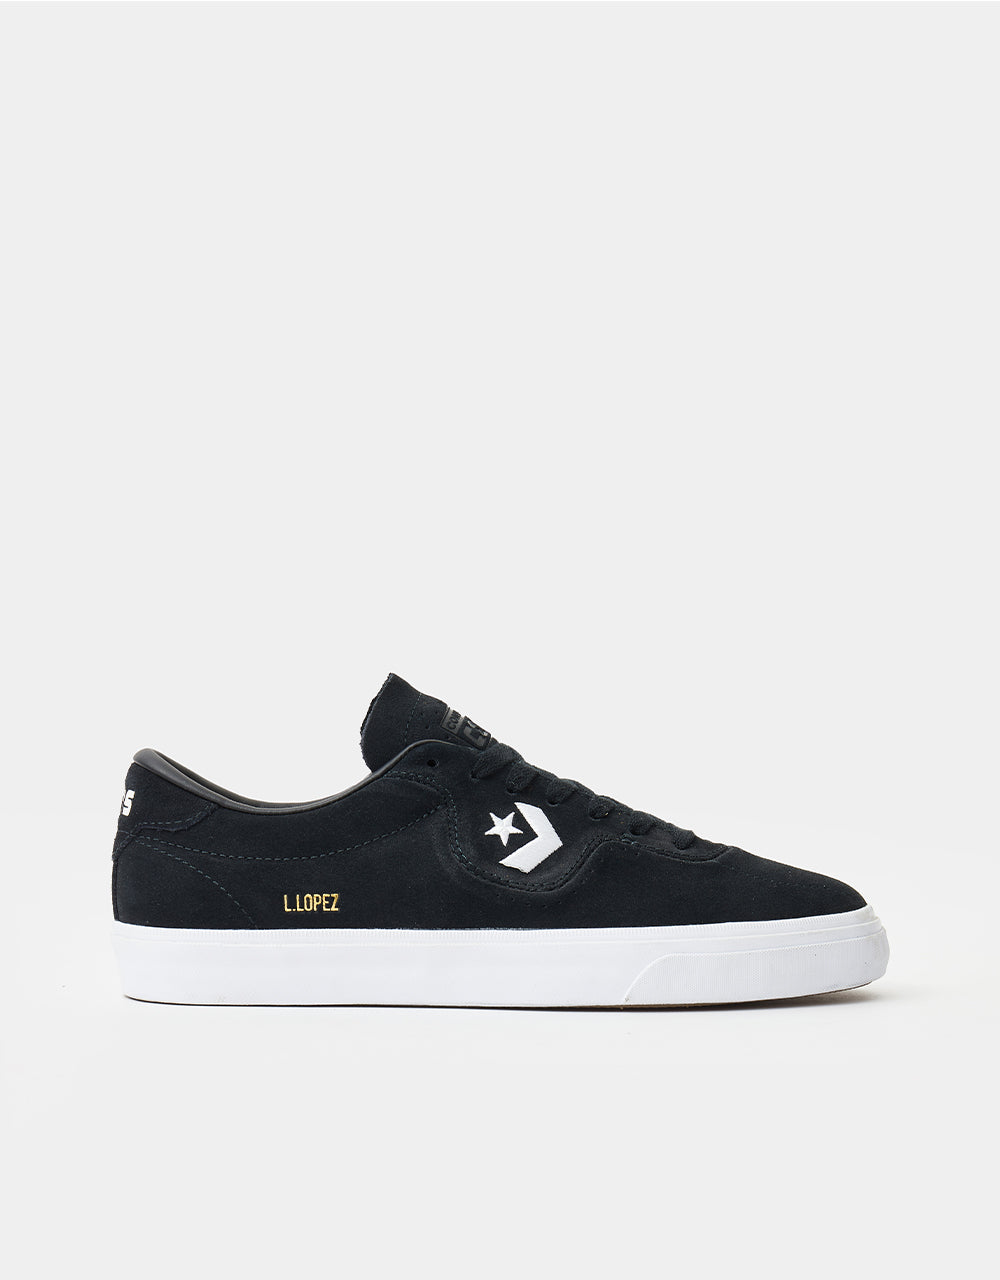 Converse Louie Lopez Pro Ox Skate Shoes - Black/Black/White